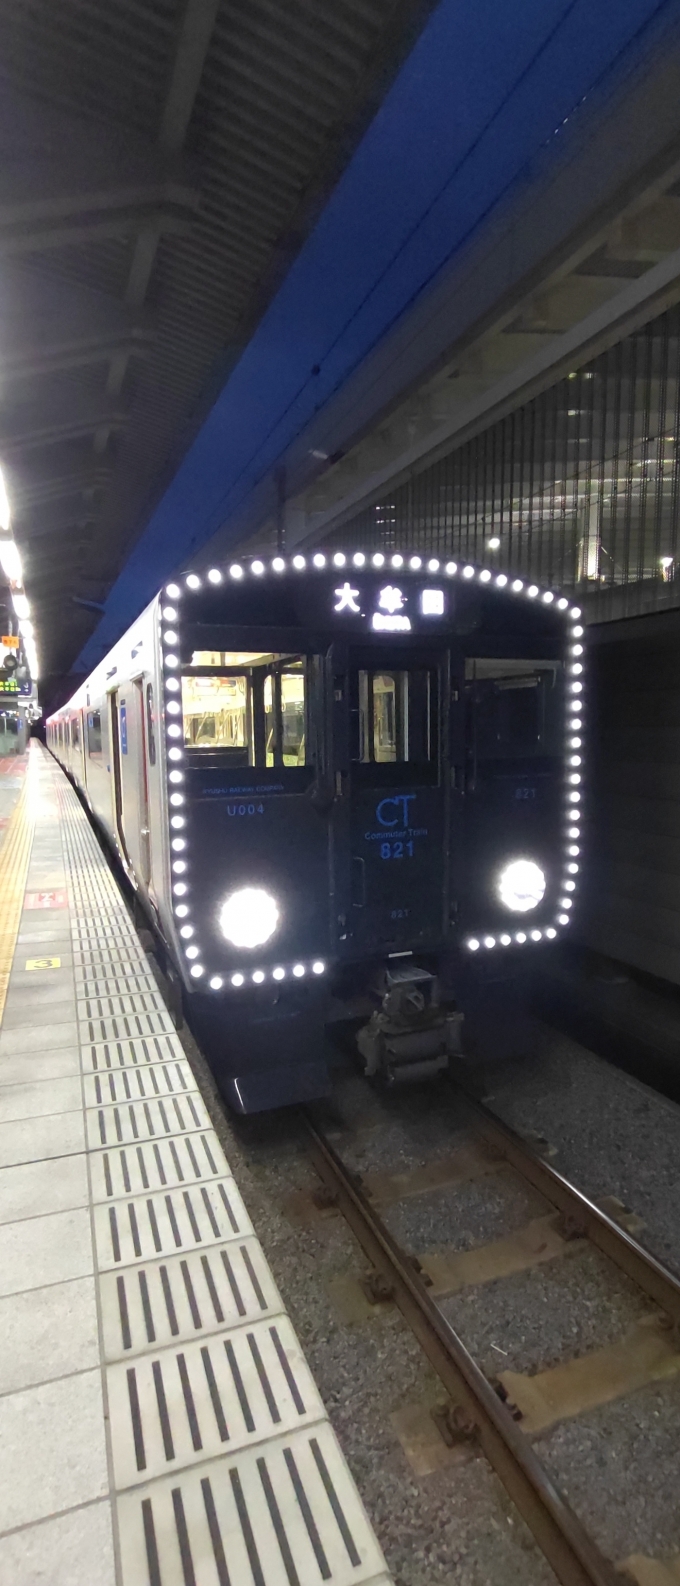 鉄道乗車記録の写真:乗車した列車(外観)(1)        「U004編成」